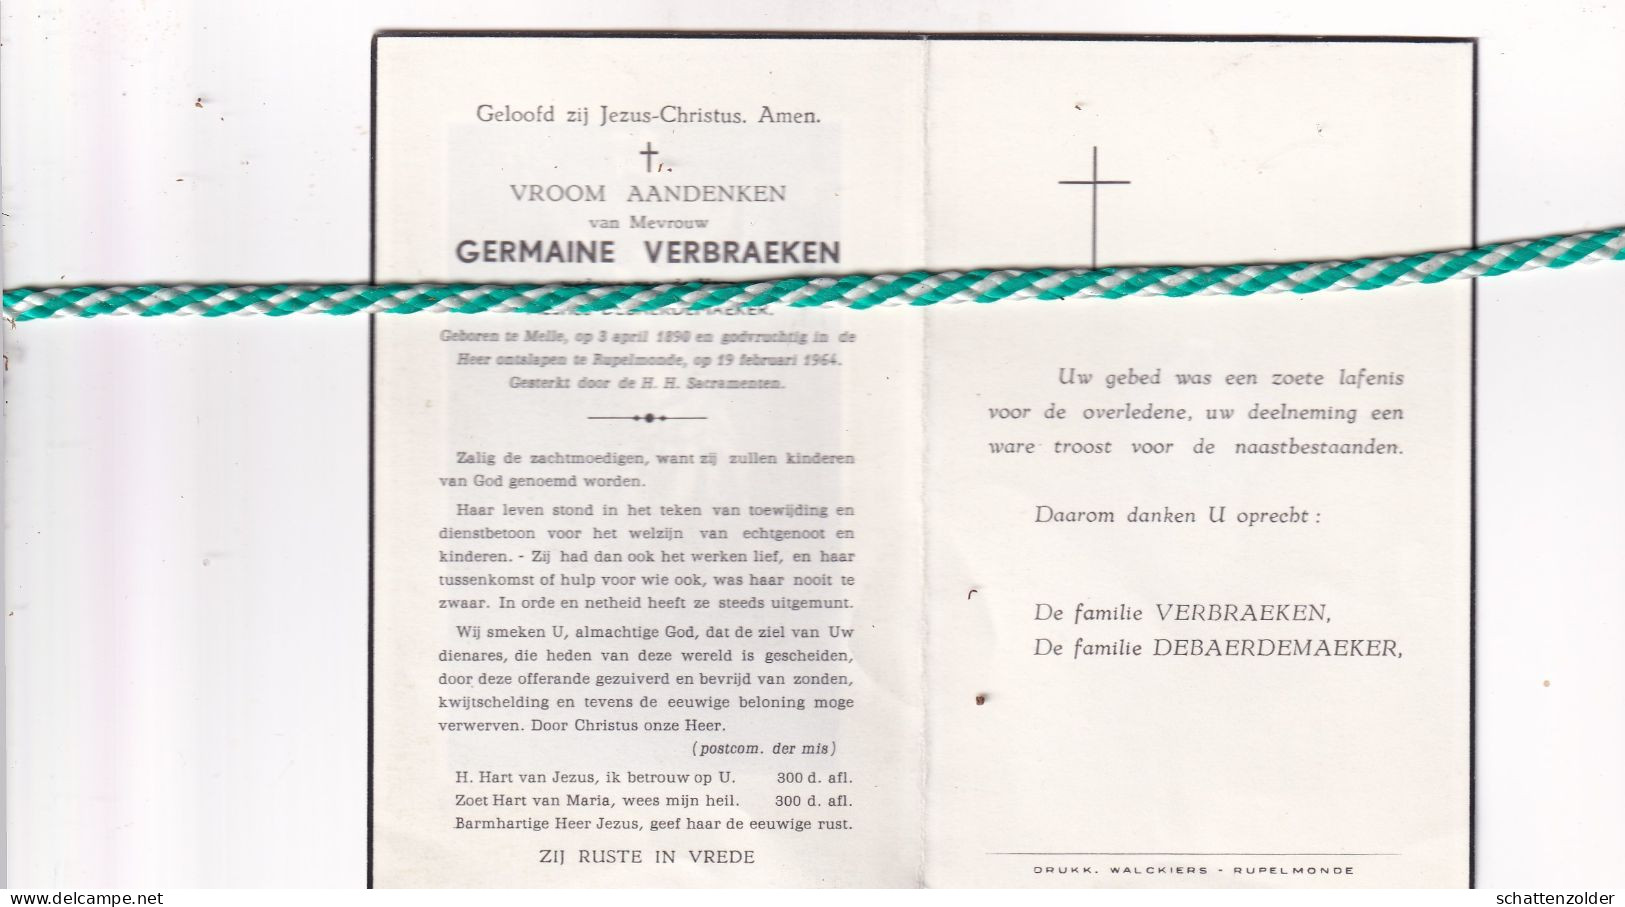 Germaine Verbraeken-Debaerdemaeker, Melle 1890, Rupelmonde 1964 - Todesanzeige